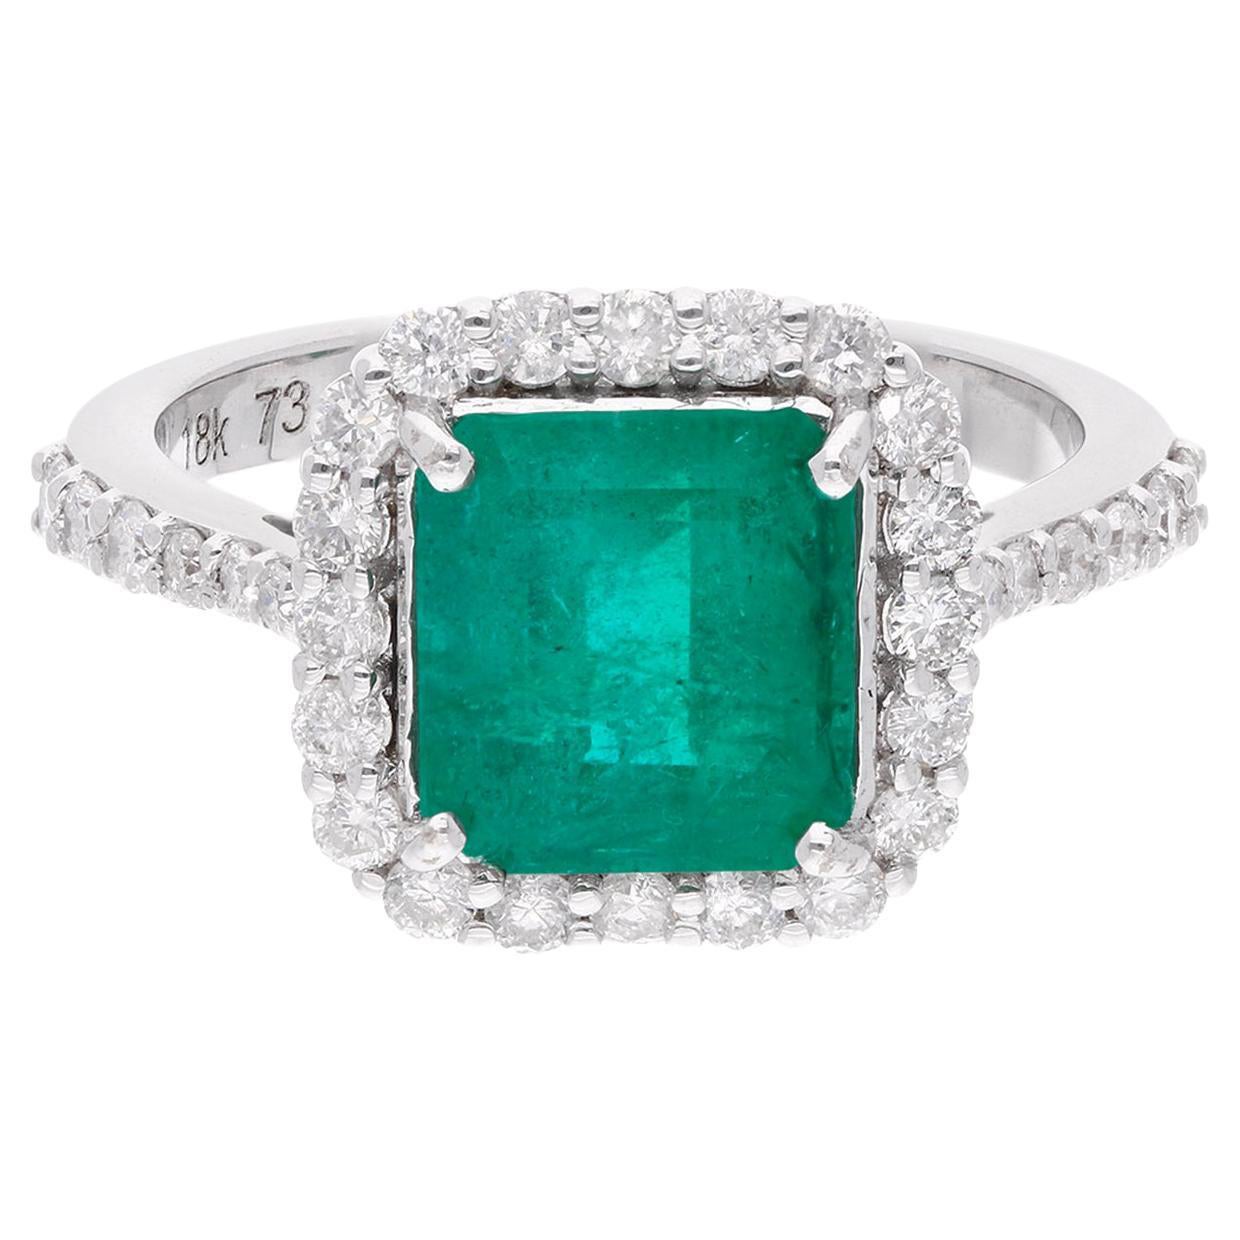 Zambian Emerald Gemstone Cocktail Ring Diamond 18 Kt White Gold Handmade Jewelry For Sale